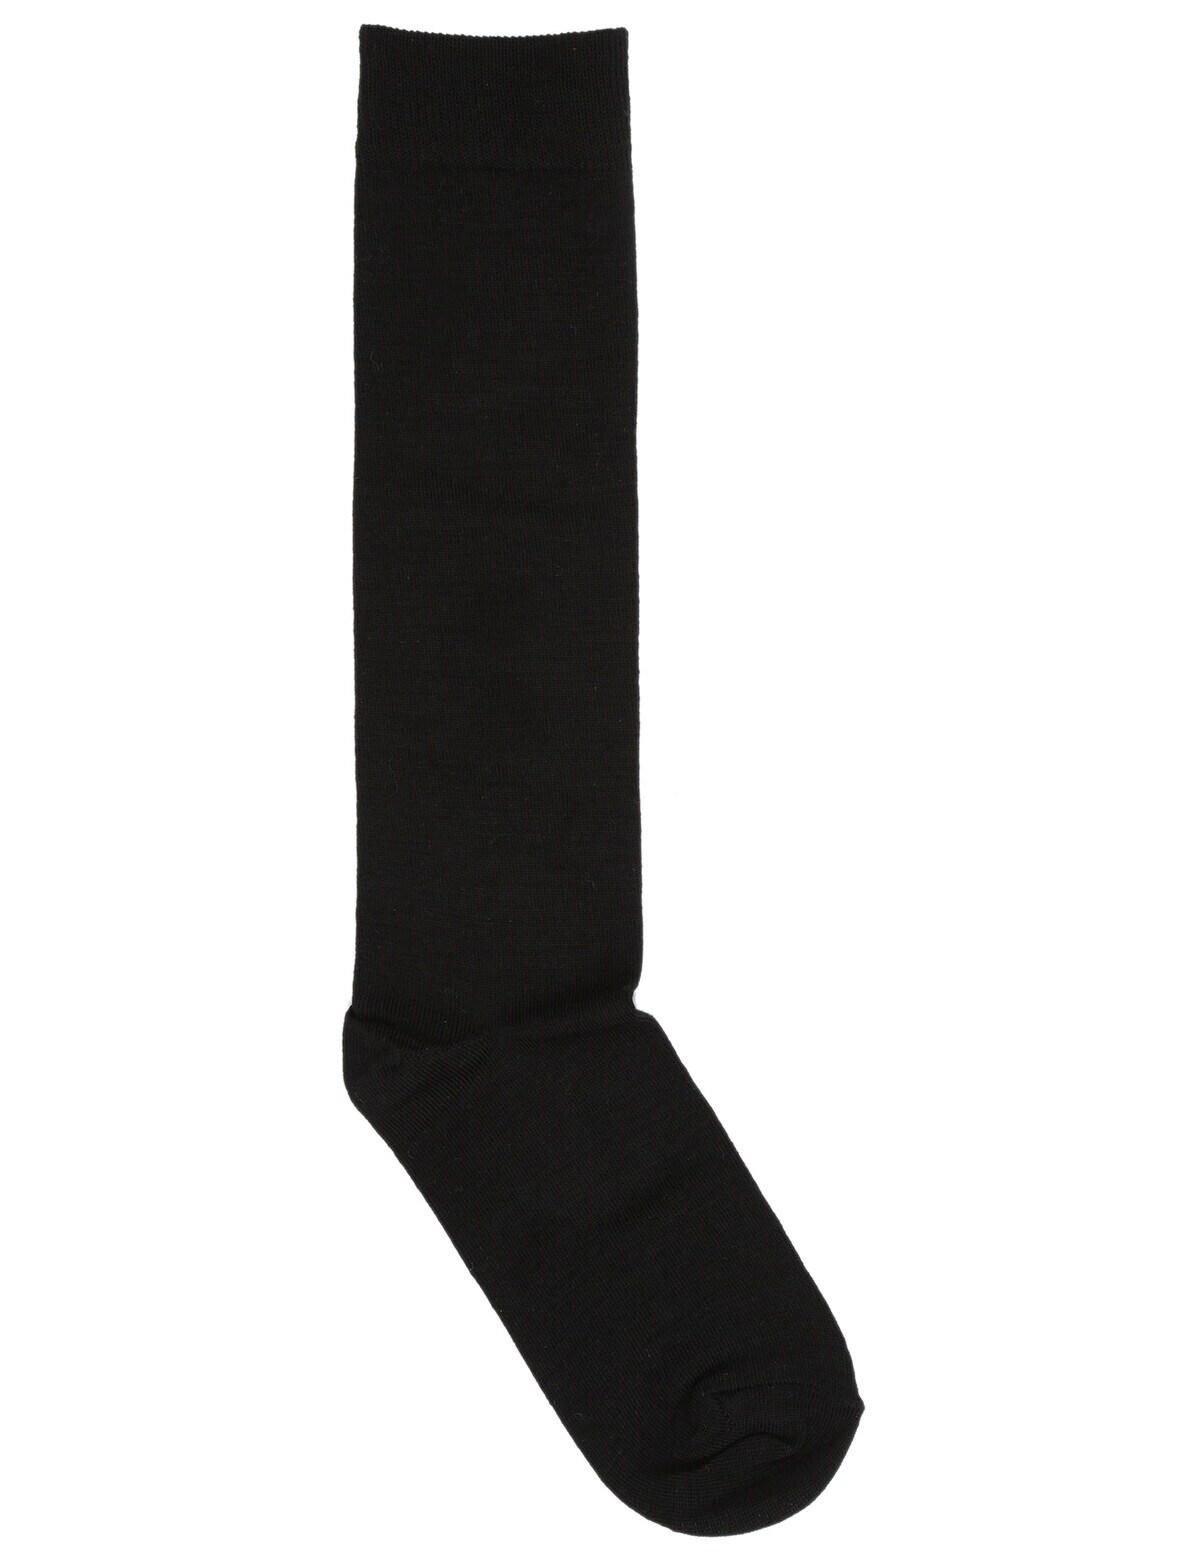 Columbine Merino Wool Knee-High Sock, Black - Socks